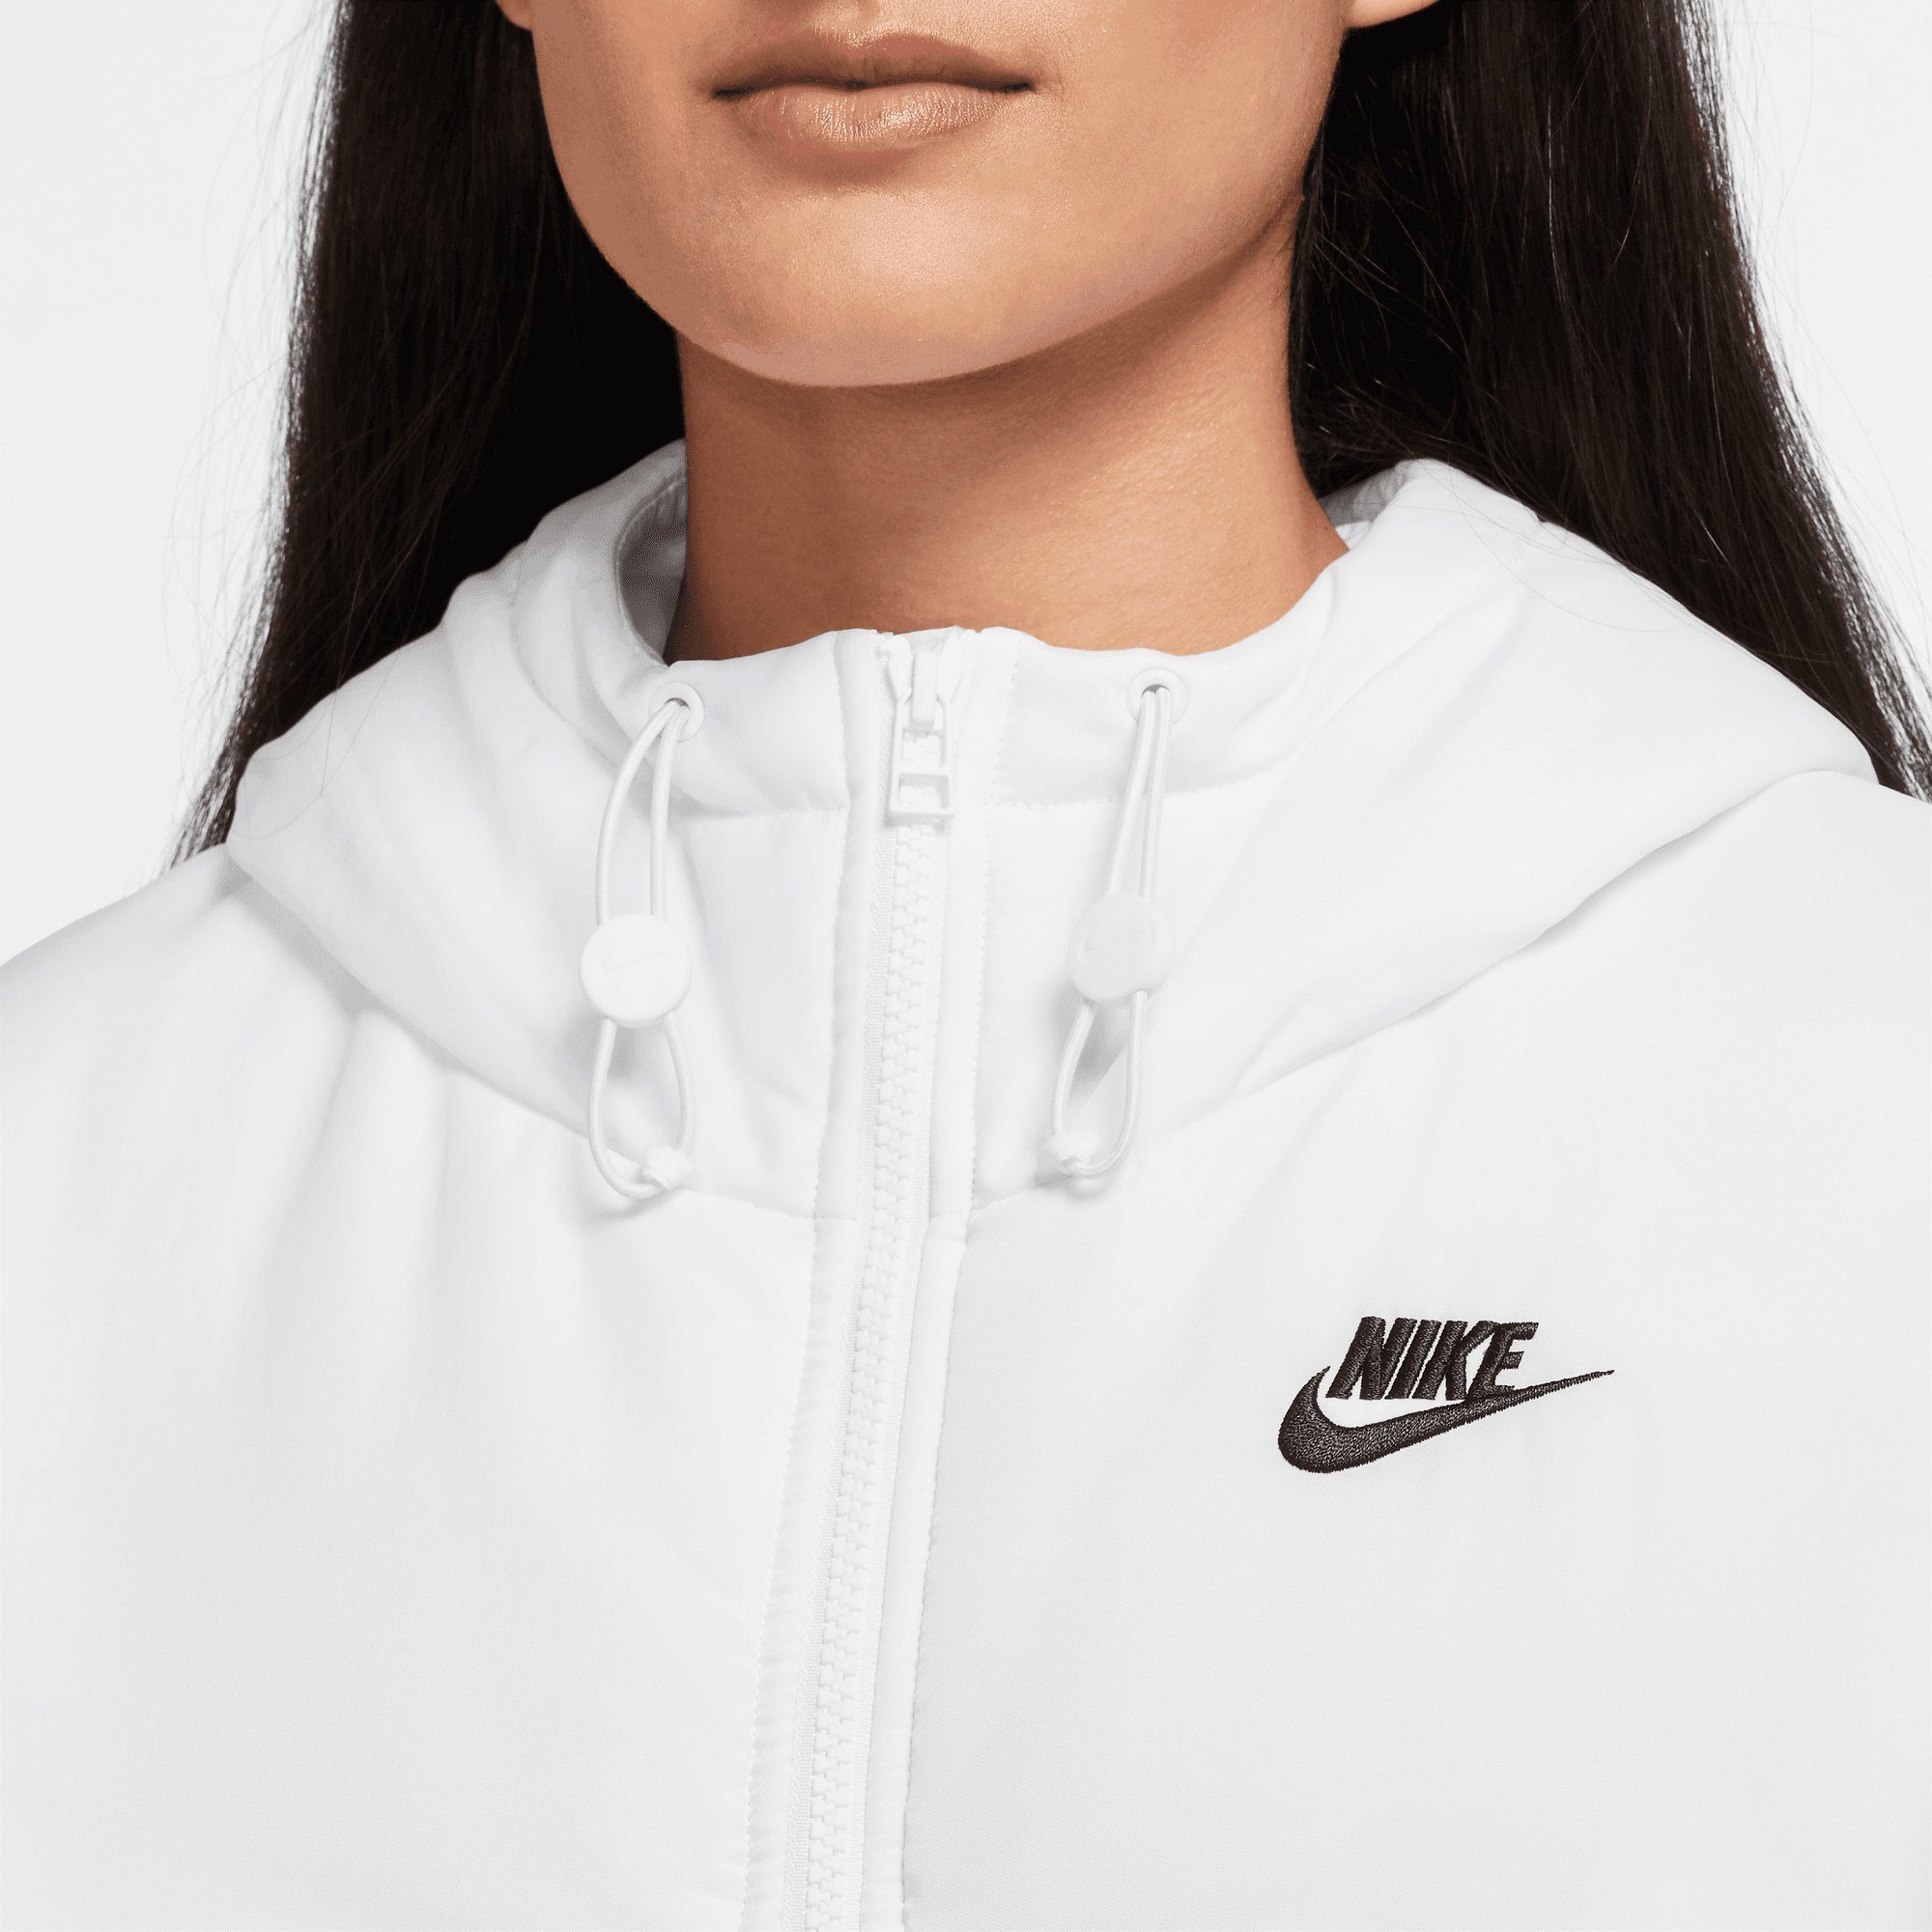 WOMEN'S Nike PARKA Steppmantel CLASSIC THERMA-FIT WHITE/BLACK Sportswear